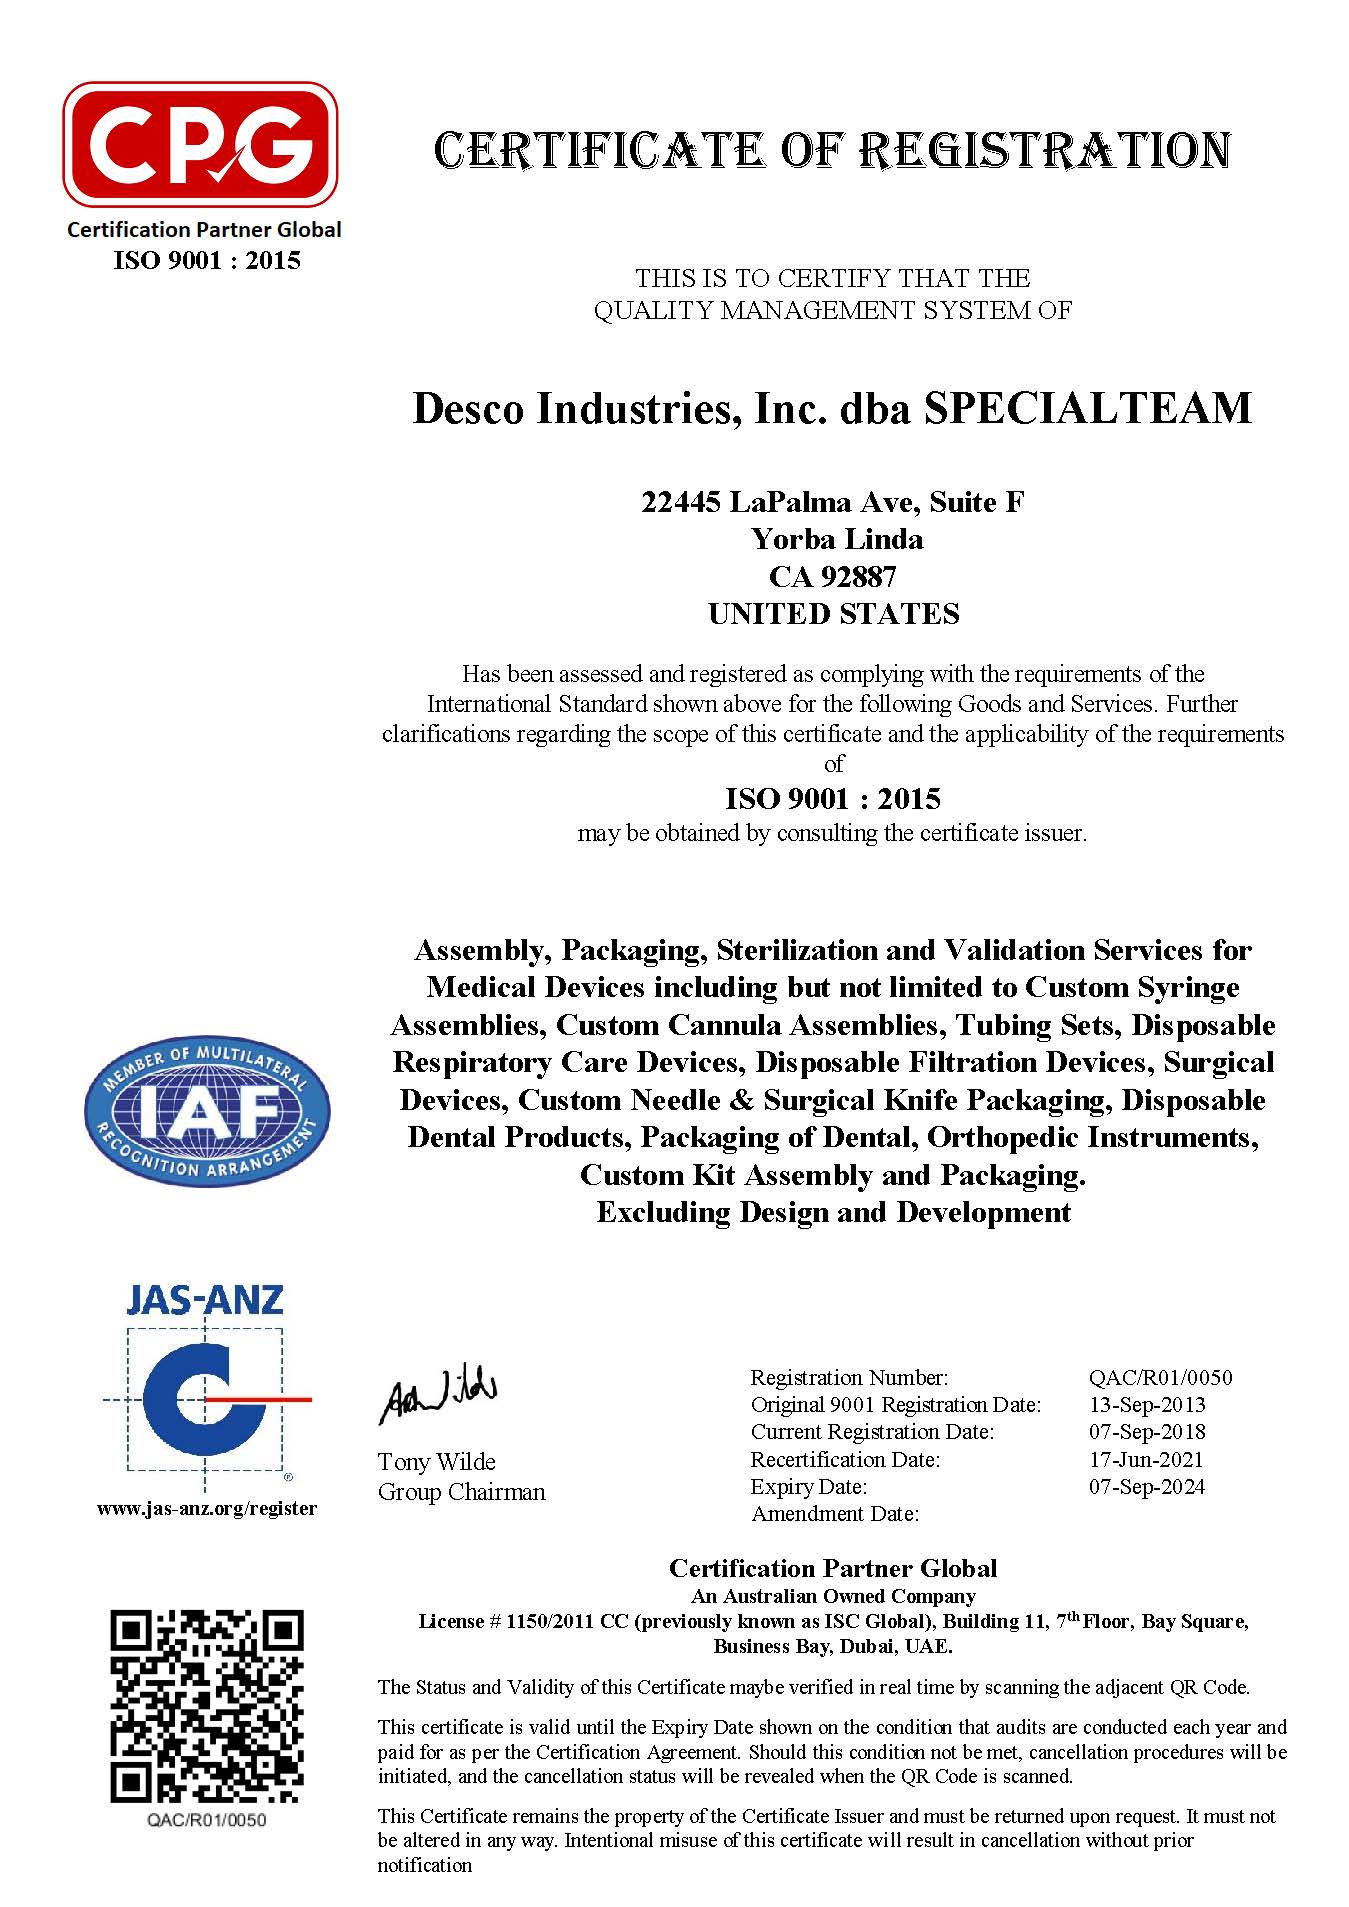 ISO 9001:2015 Triennial Certificate Global 2018-09-06 SpecialTeam.jpg